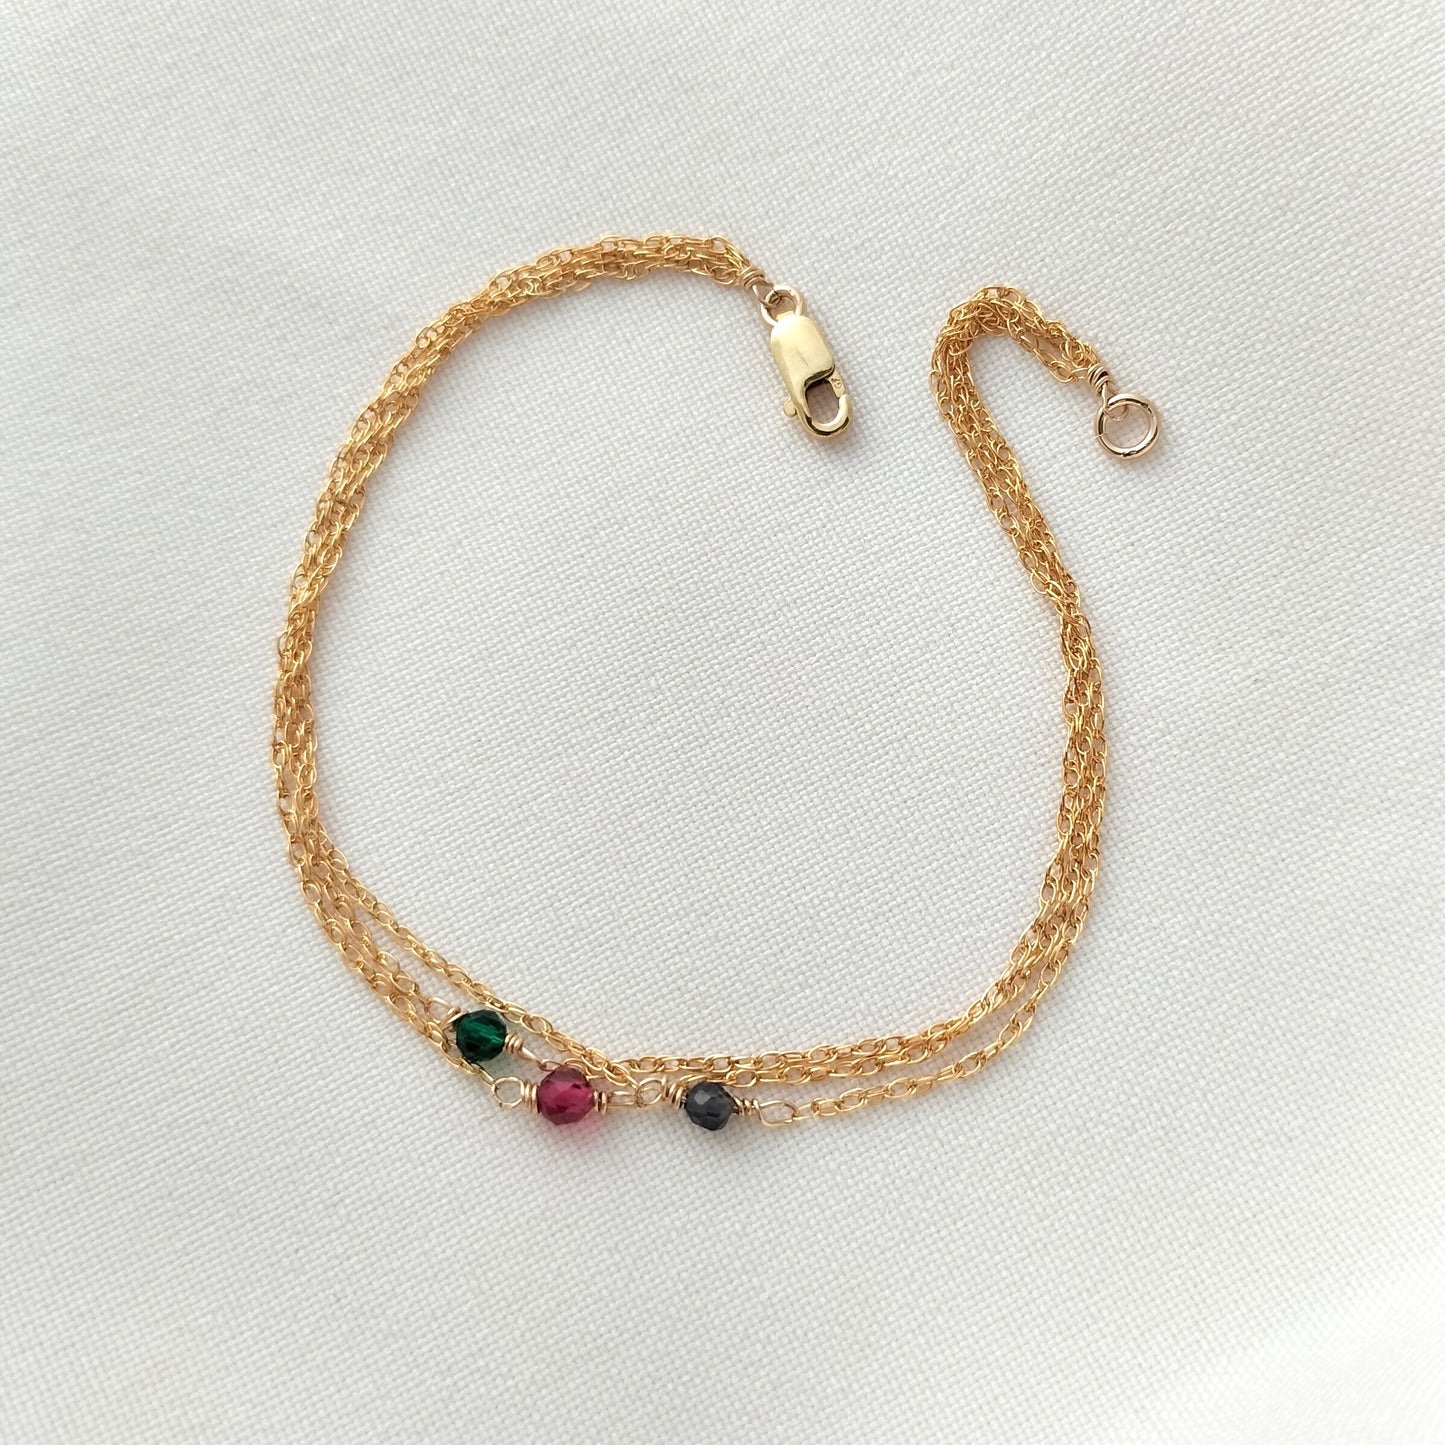 Triple strand jewel tone gemstone bracelet